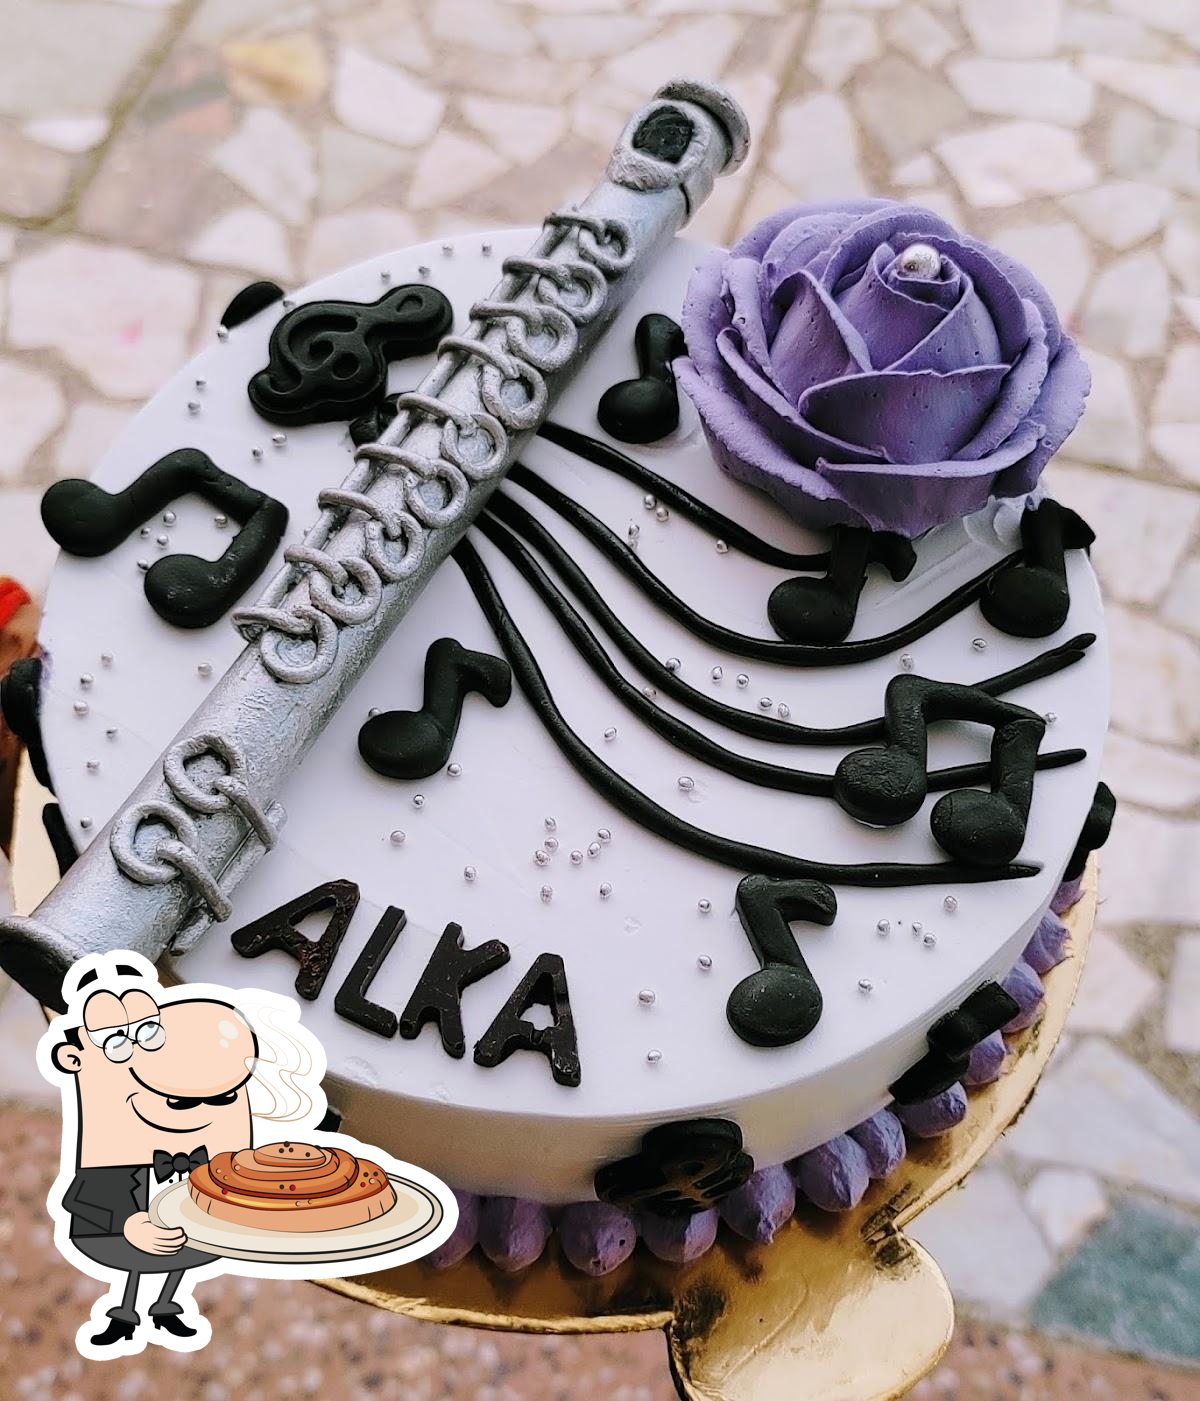 Clarinet Cake | Music cakes, Music themed cakes, Clarinet